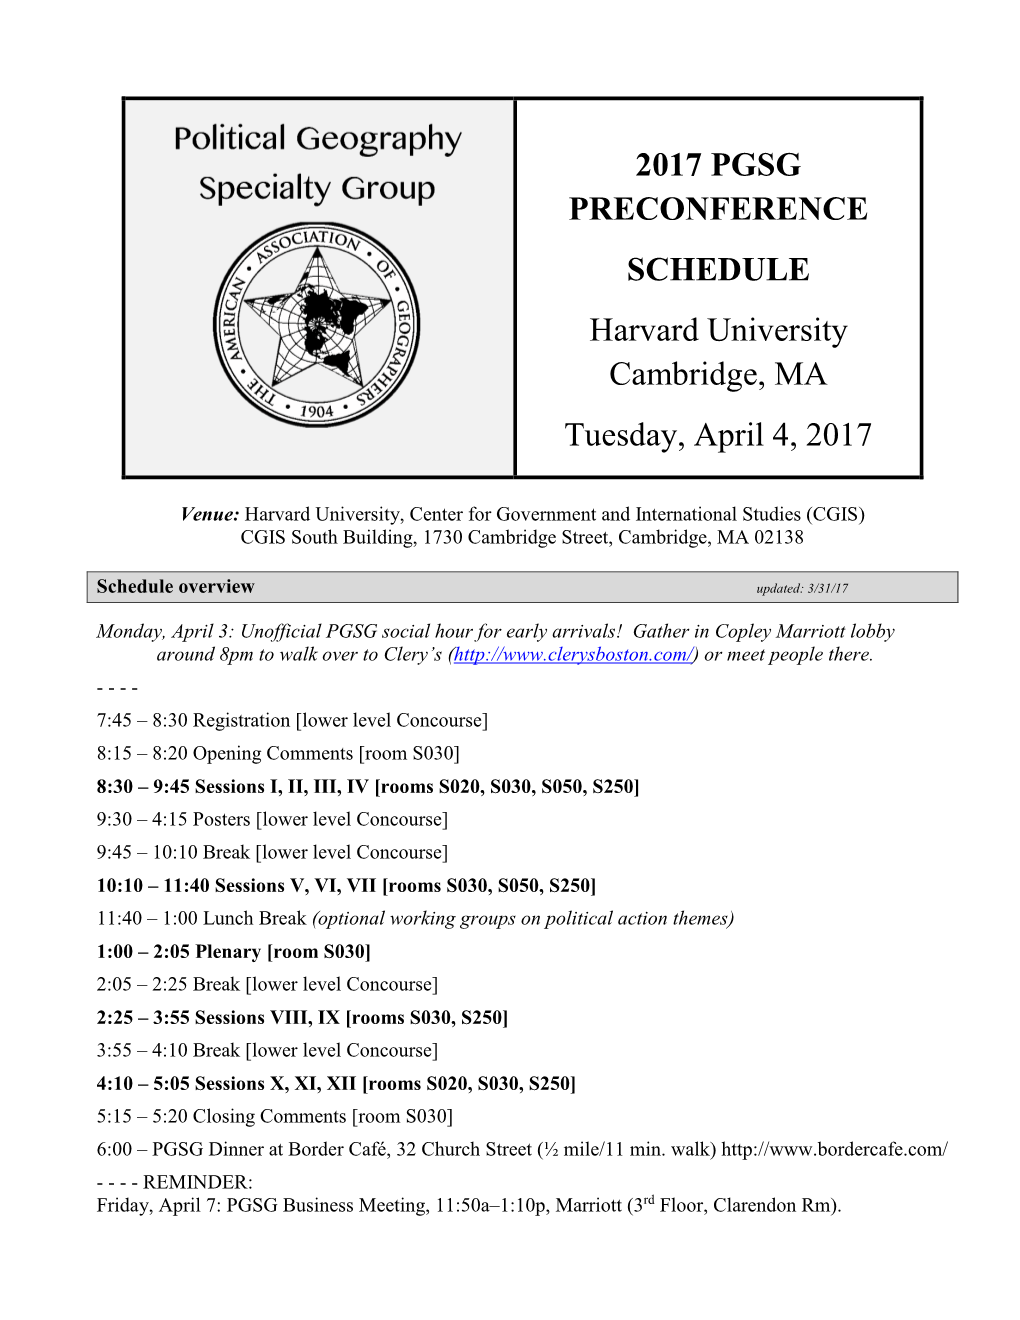 2017 PGSG PRECONFERENCE SCHEDULE Harvard University Cambridge, MA Tuesday, April 4, 2017